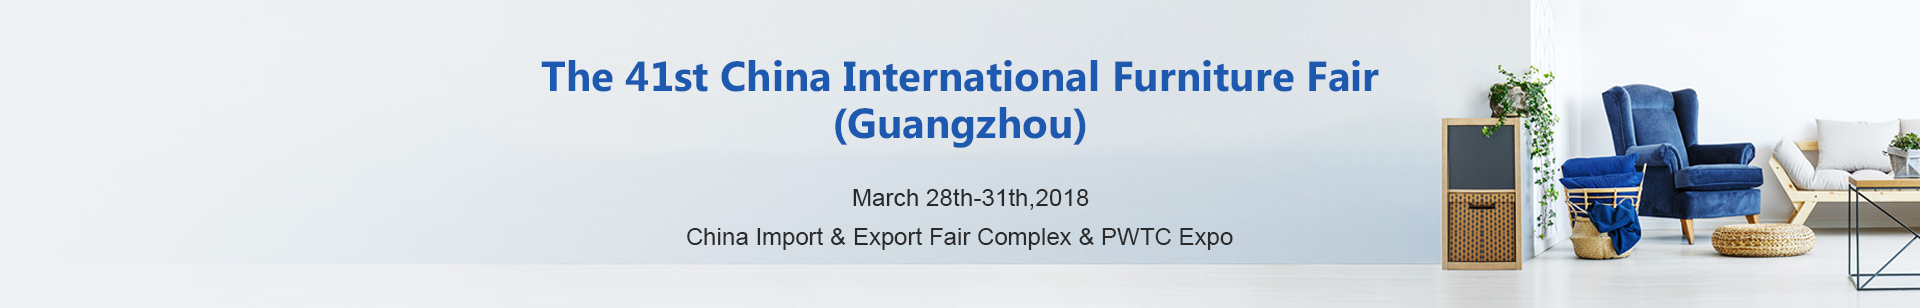 The 41st China International Furniture Fair(Guangzhou)